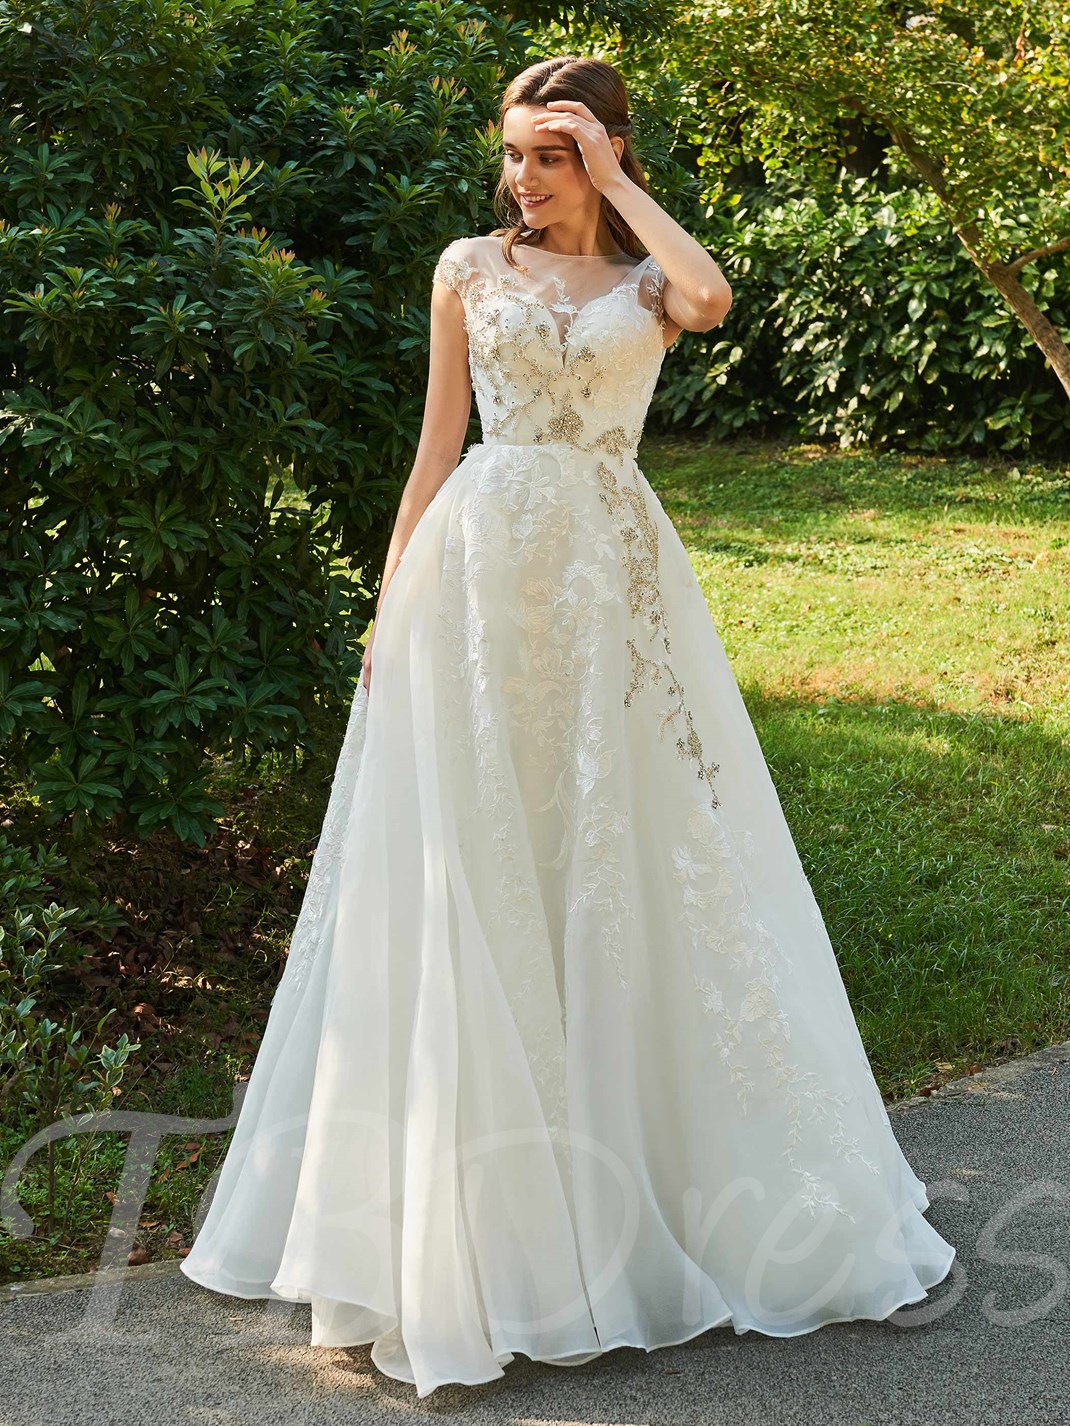 The Cap Sleeve Wedding Dress - 18 Beautiful Gowns